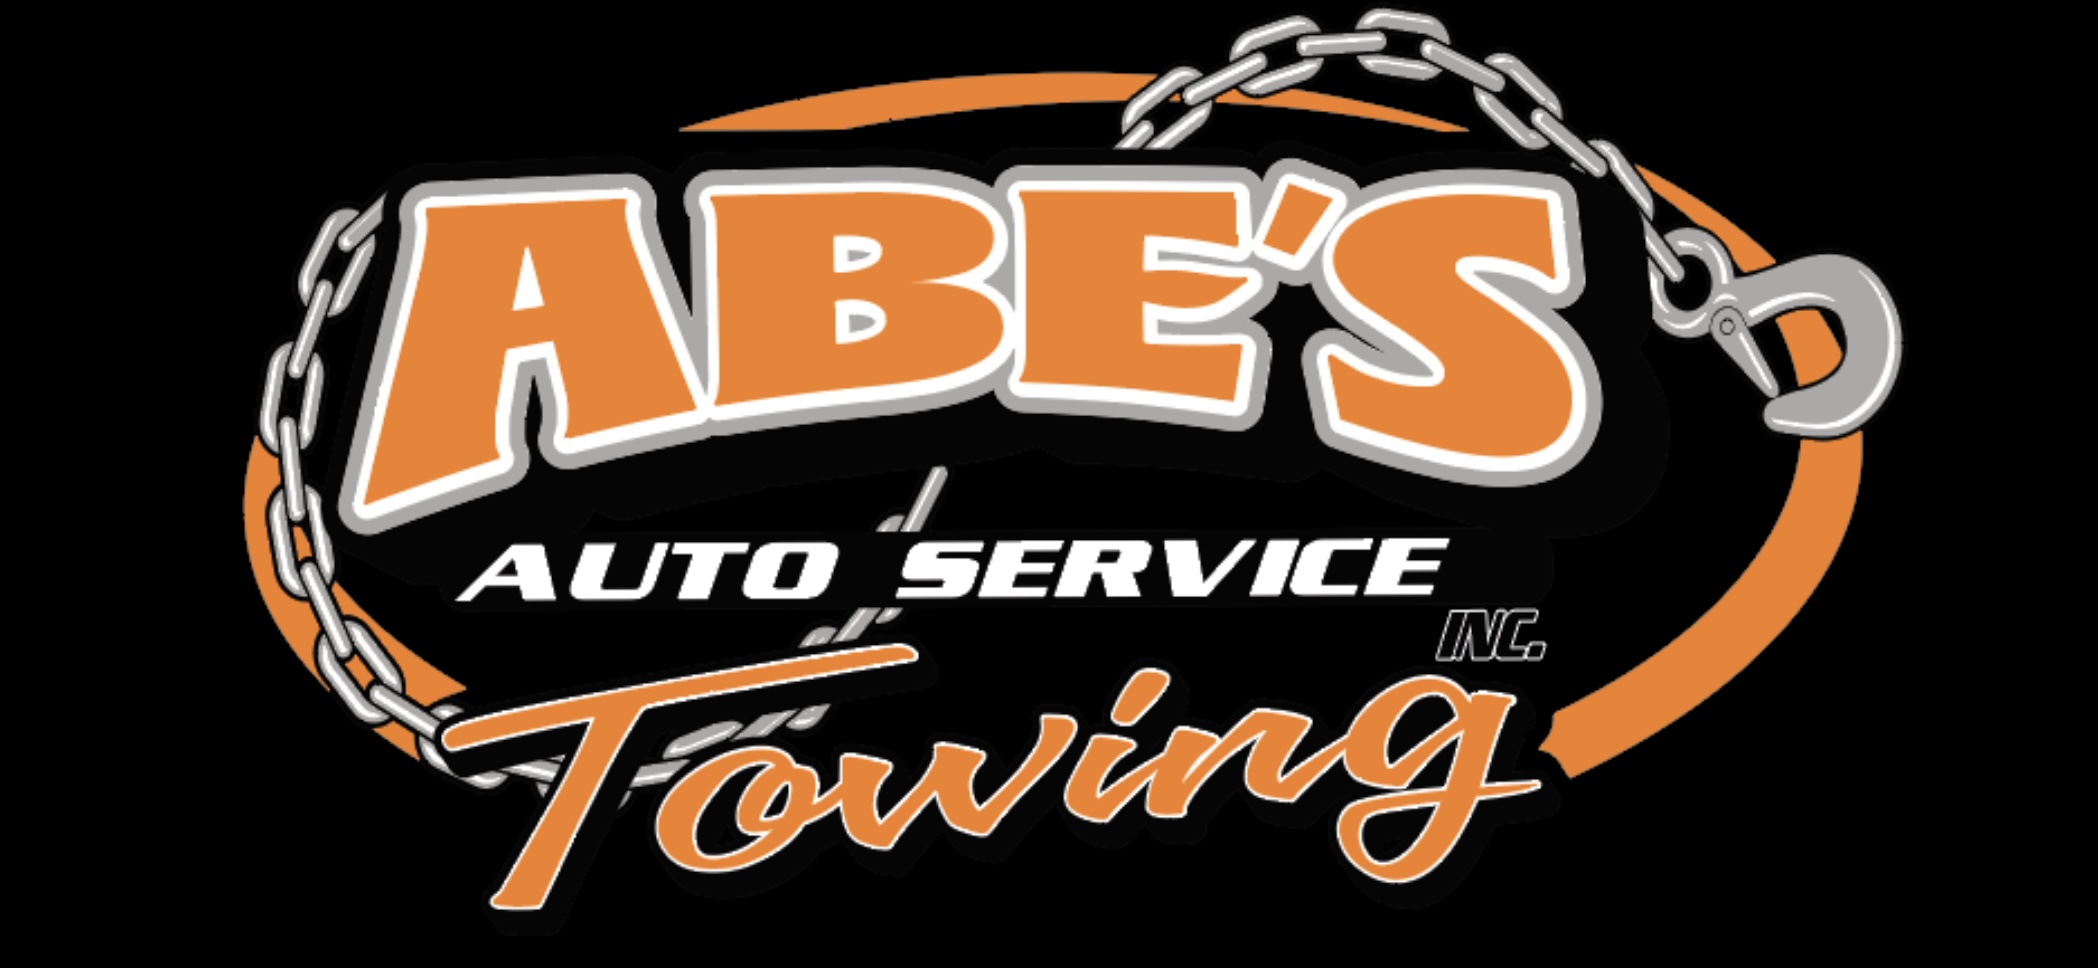 Abe's Auto Service, Inc.